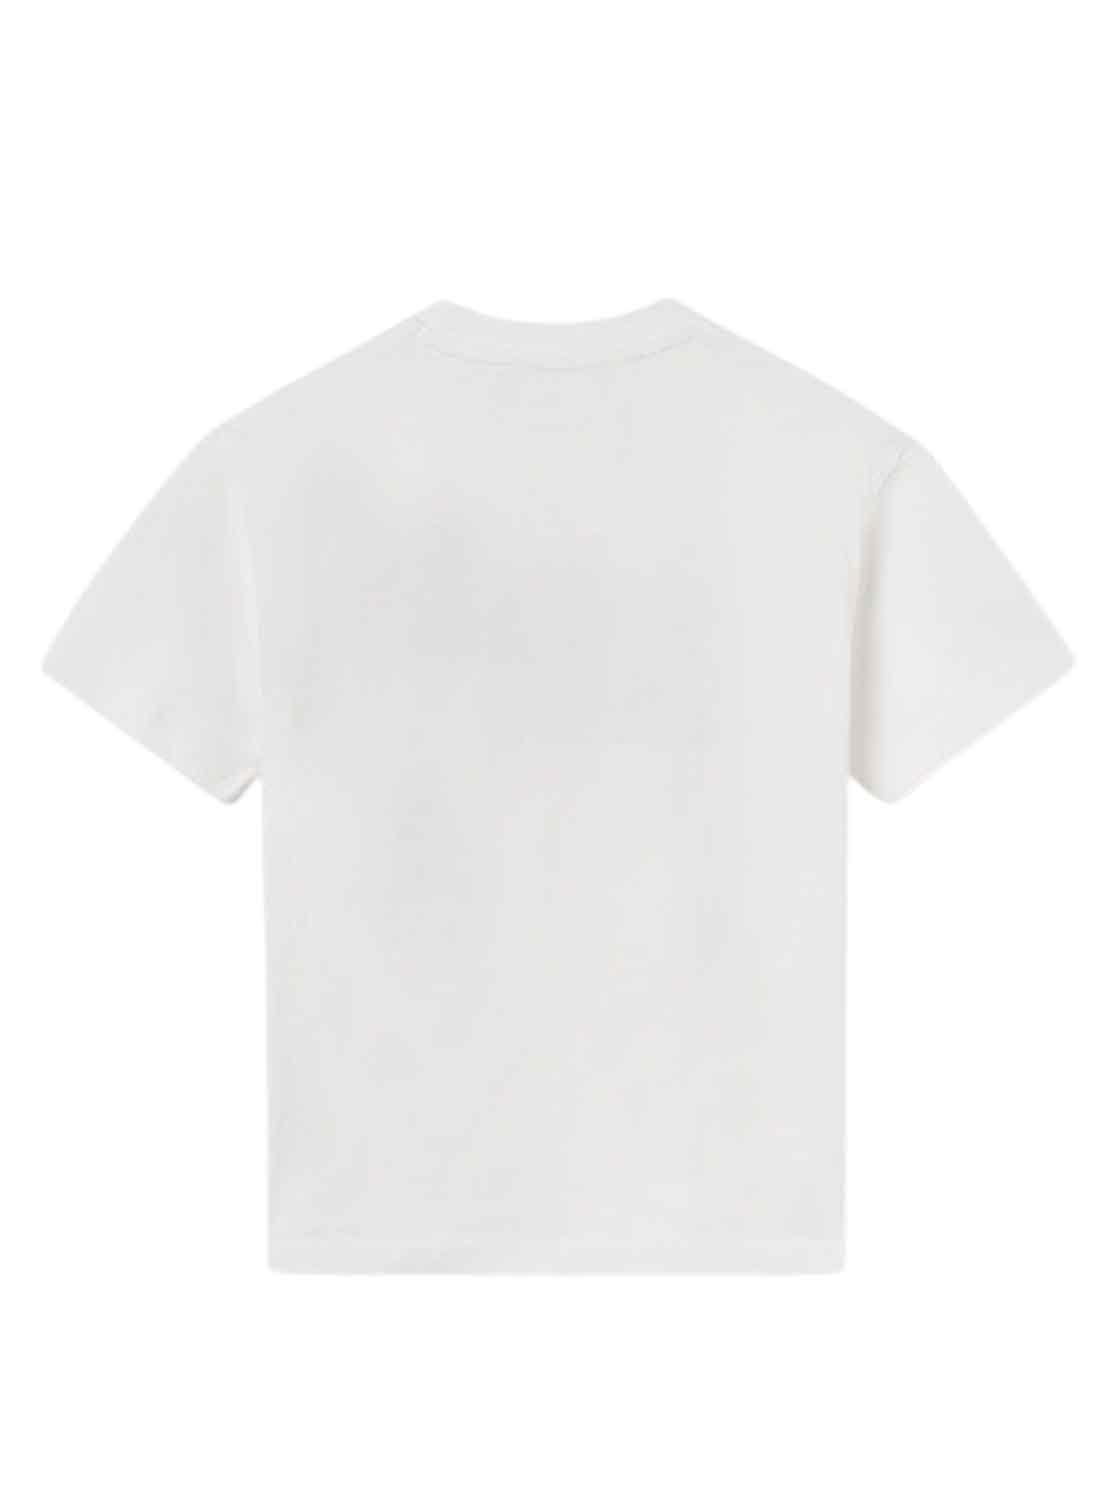 T-Shirt Mayoral Embossed Bianco per Bambino